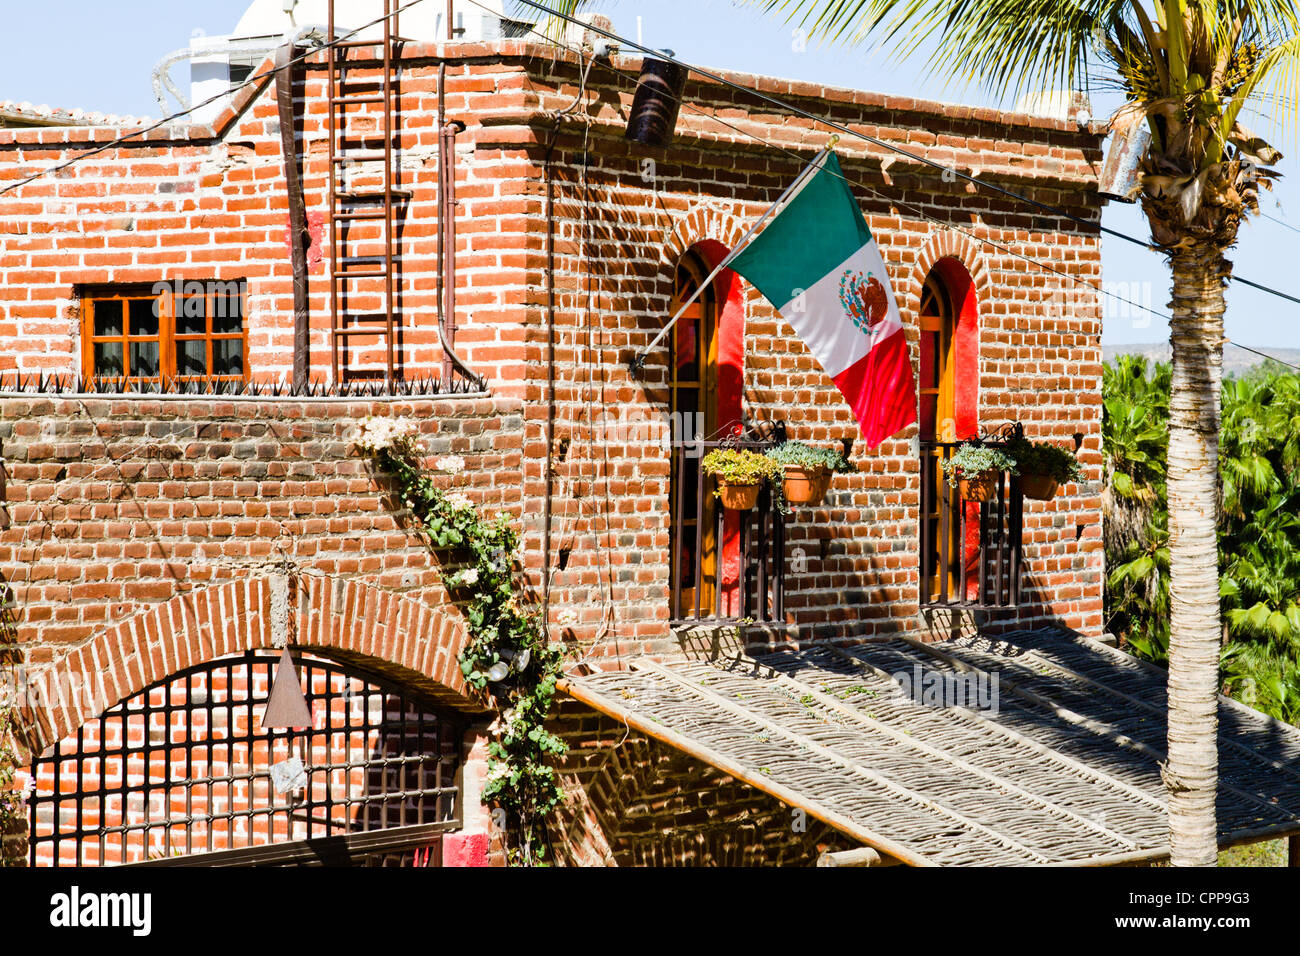 Mexico house mexican flag -Fotos und -Bildmaterial in hoher Auflösung –  Alamy